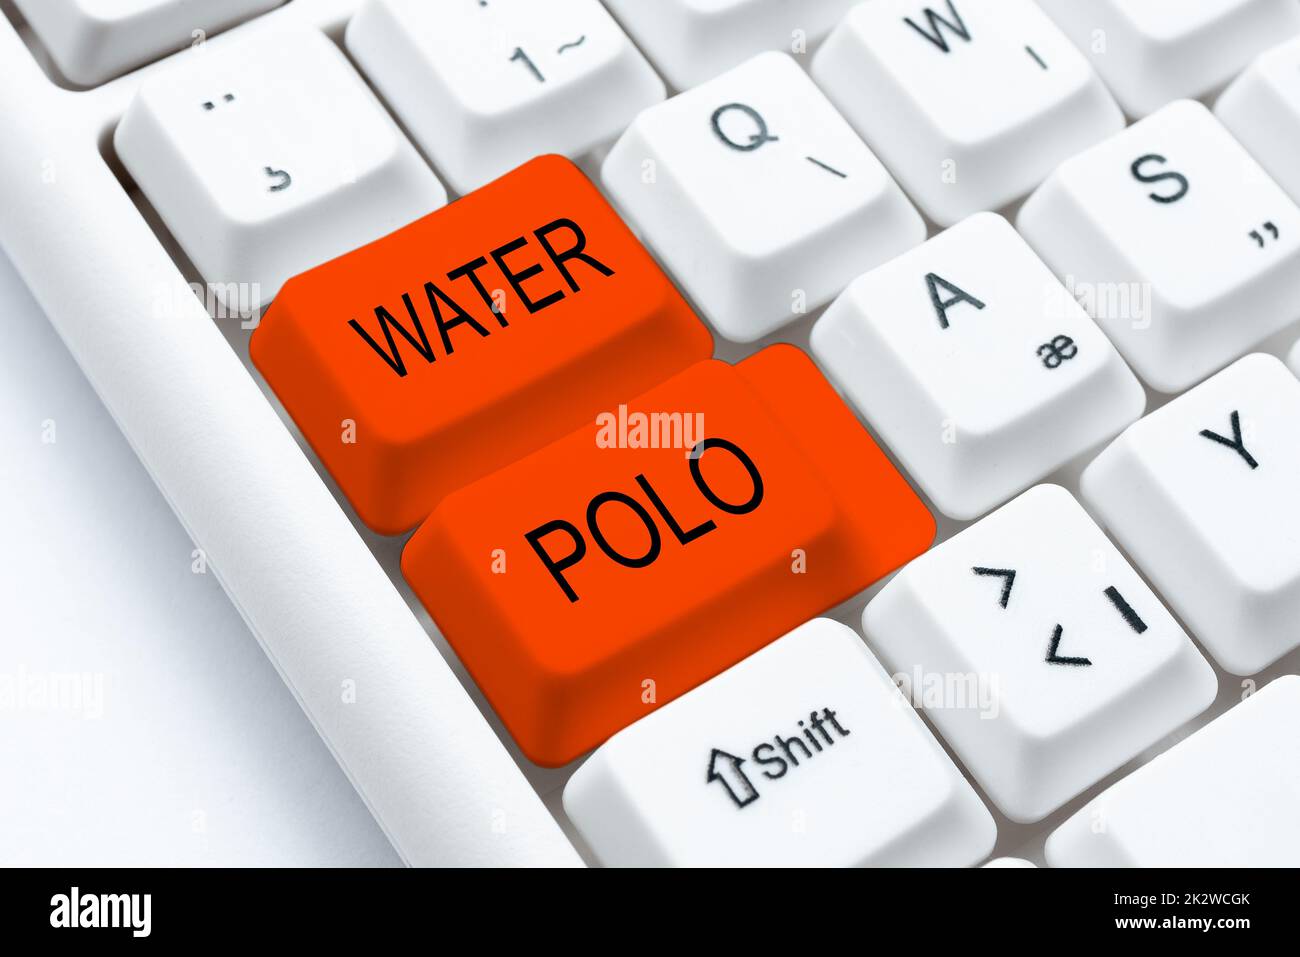 Polo de agua con pantalla conceptual. Palabras para un deporte de equipo competitivo jugado en el agua entre dos equipos -48813 Foto de stock